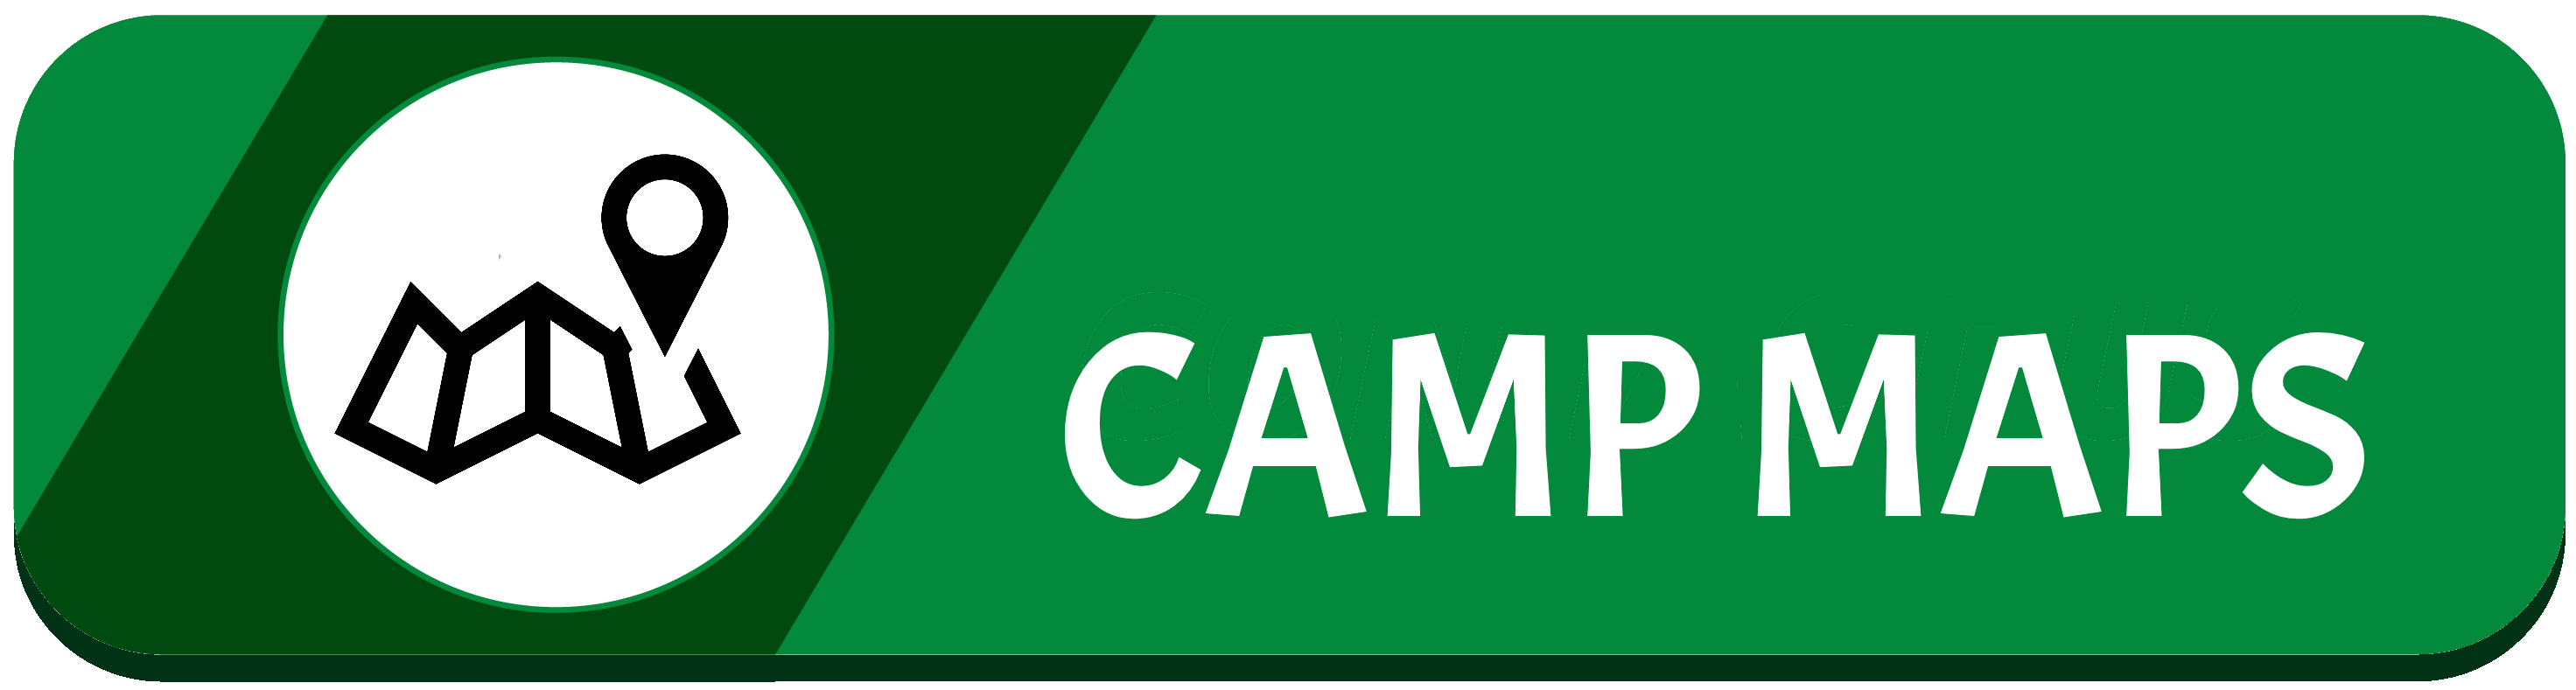 Camp Maps Button